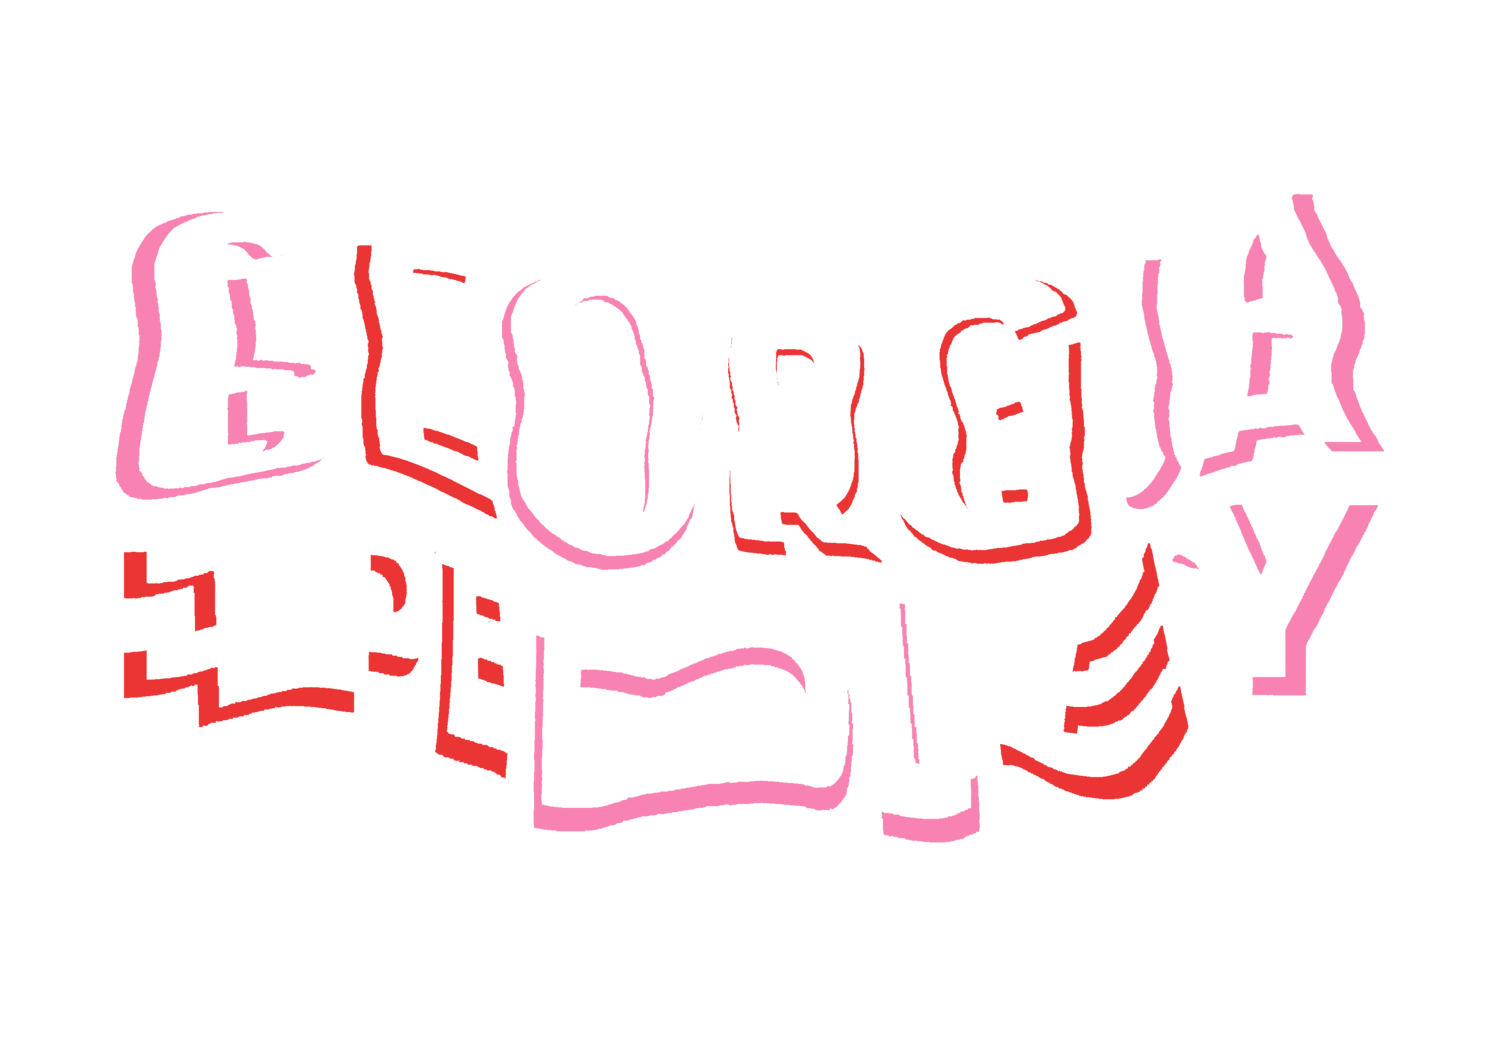 GEORGIA PEDLEY